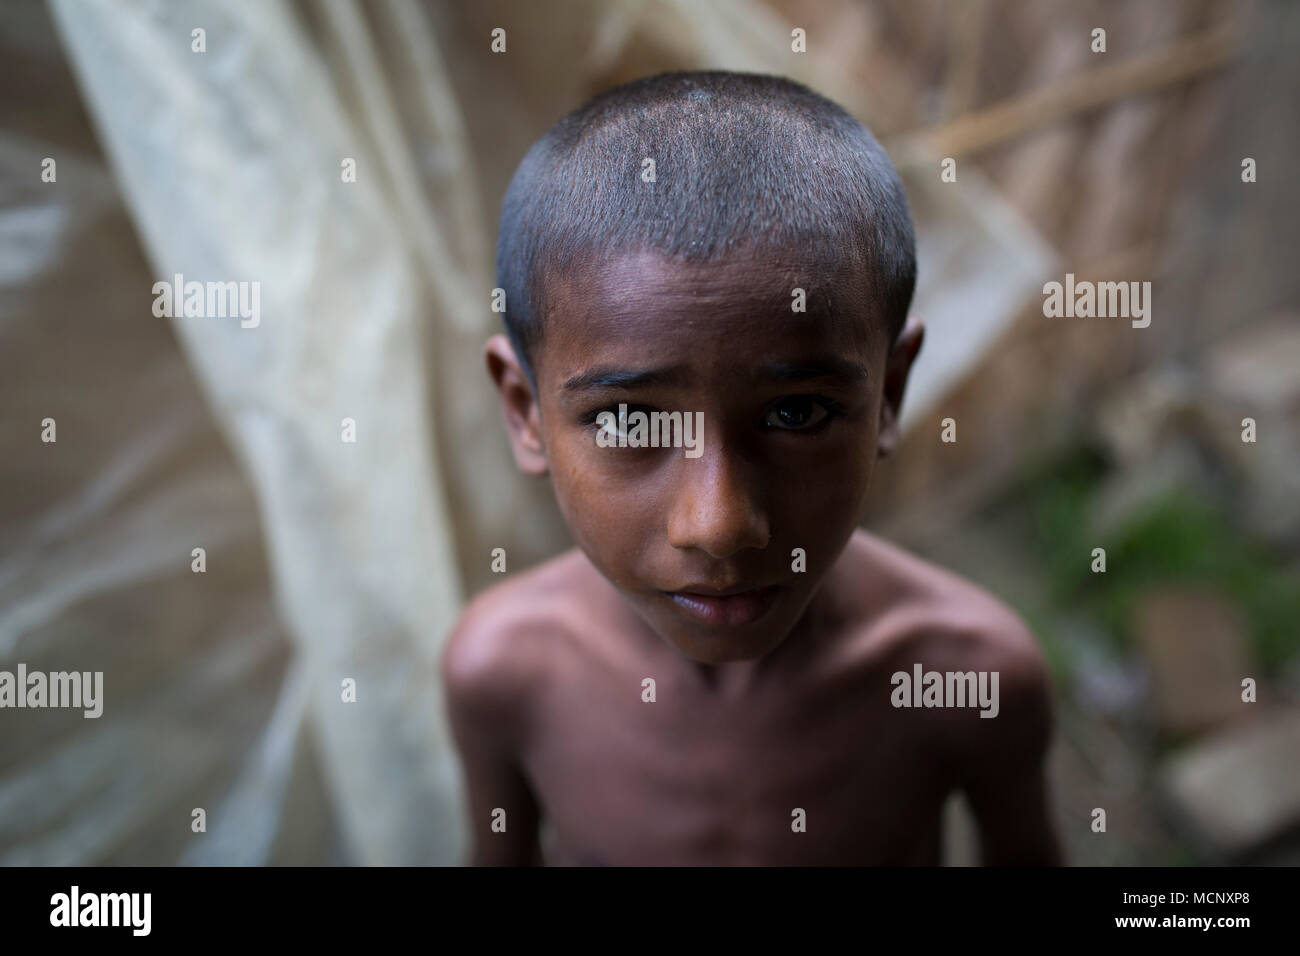 DHAKA, BANGLADESH - APRIL 17 : Portrait of a child in Dhaka, Bangladesh on April 17, 2018. Credit: zakir hossain chowdhury zakir/Alamy Live News Stock Photo